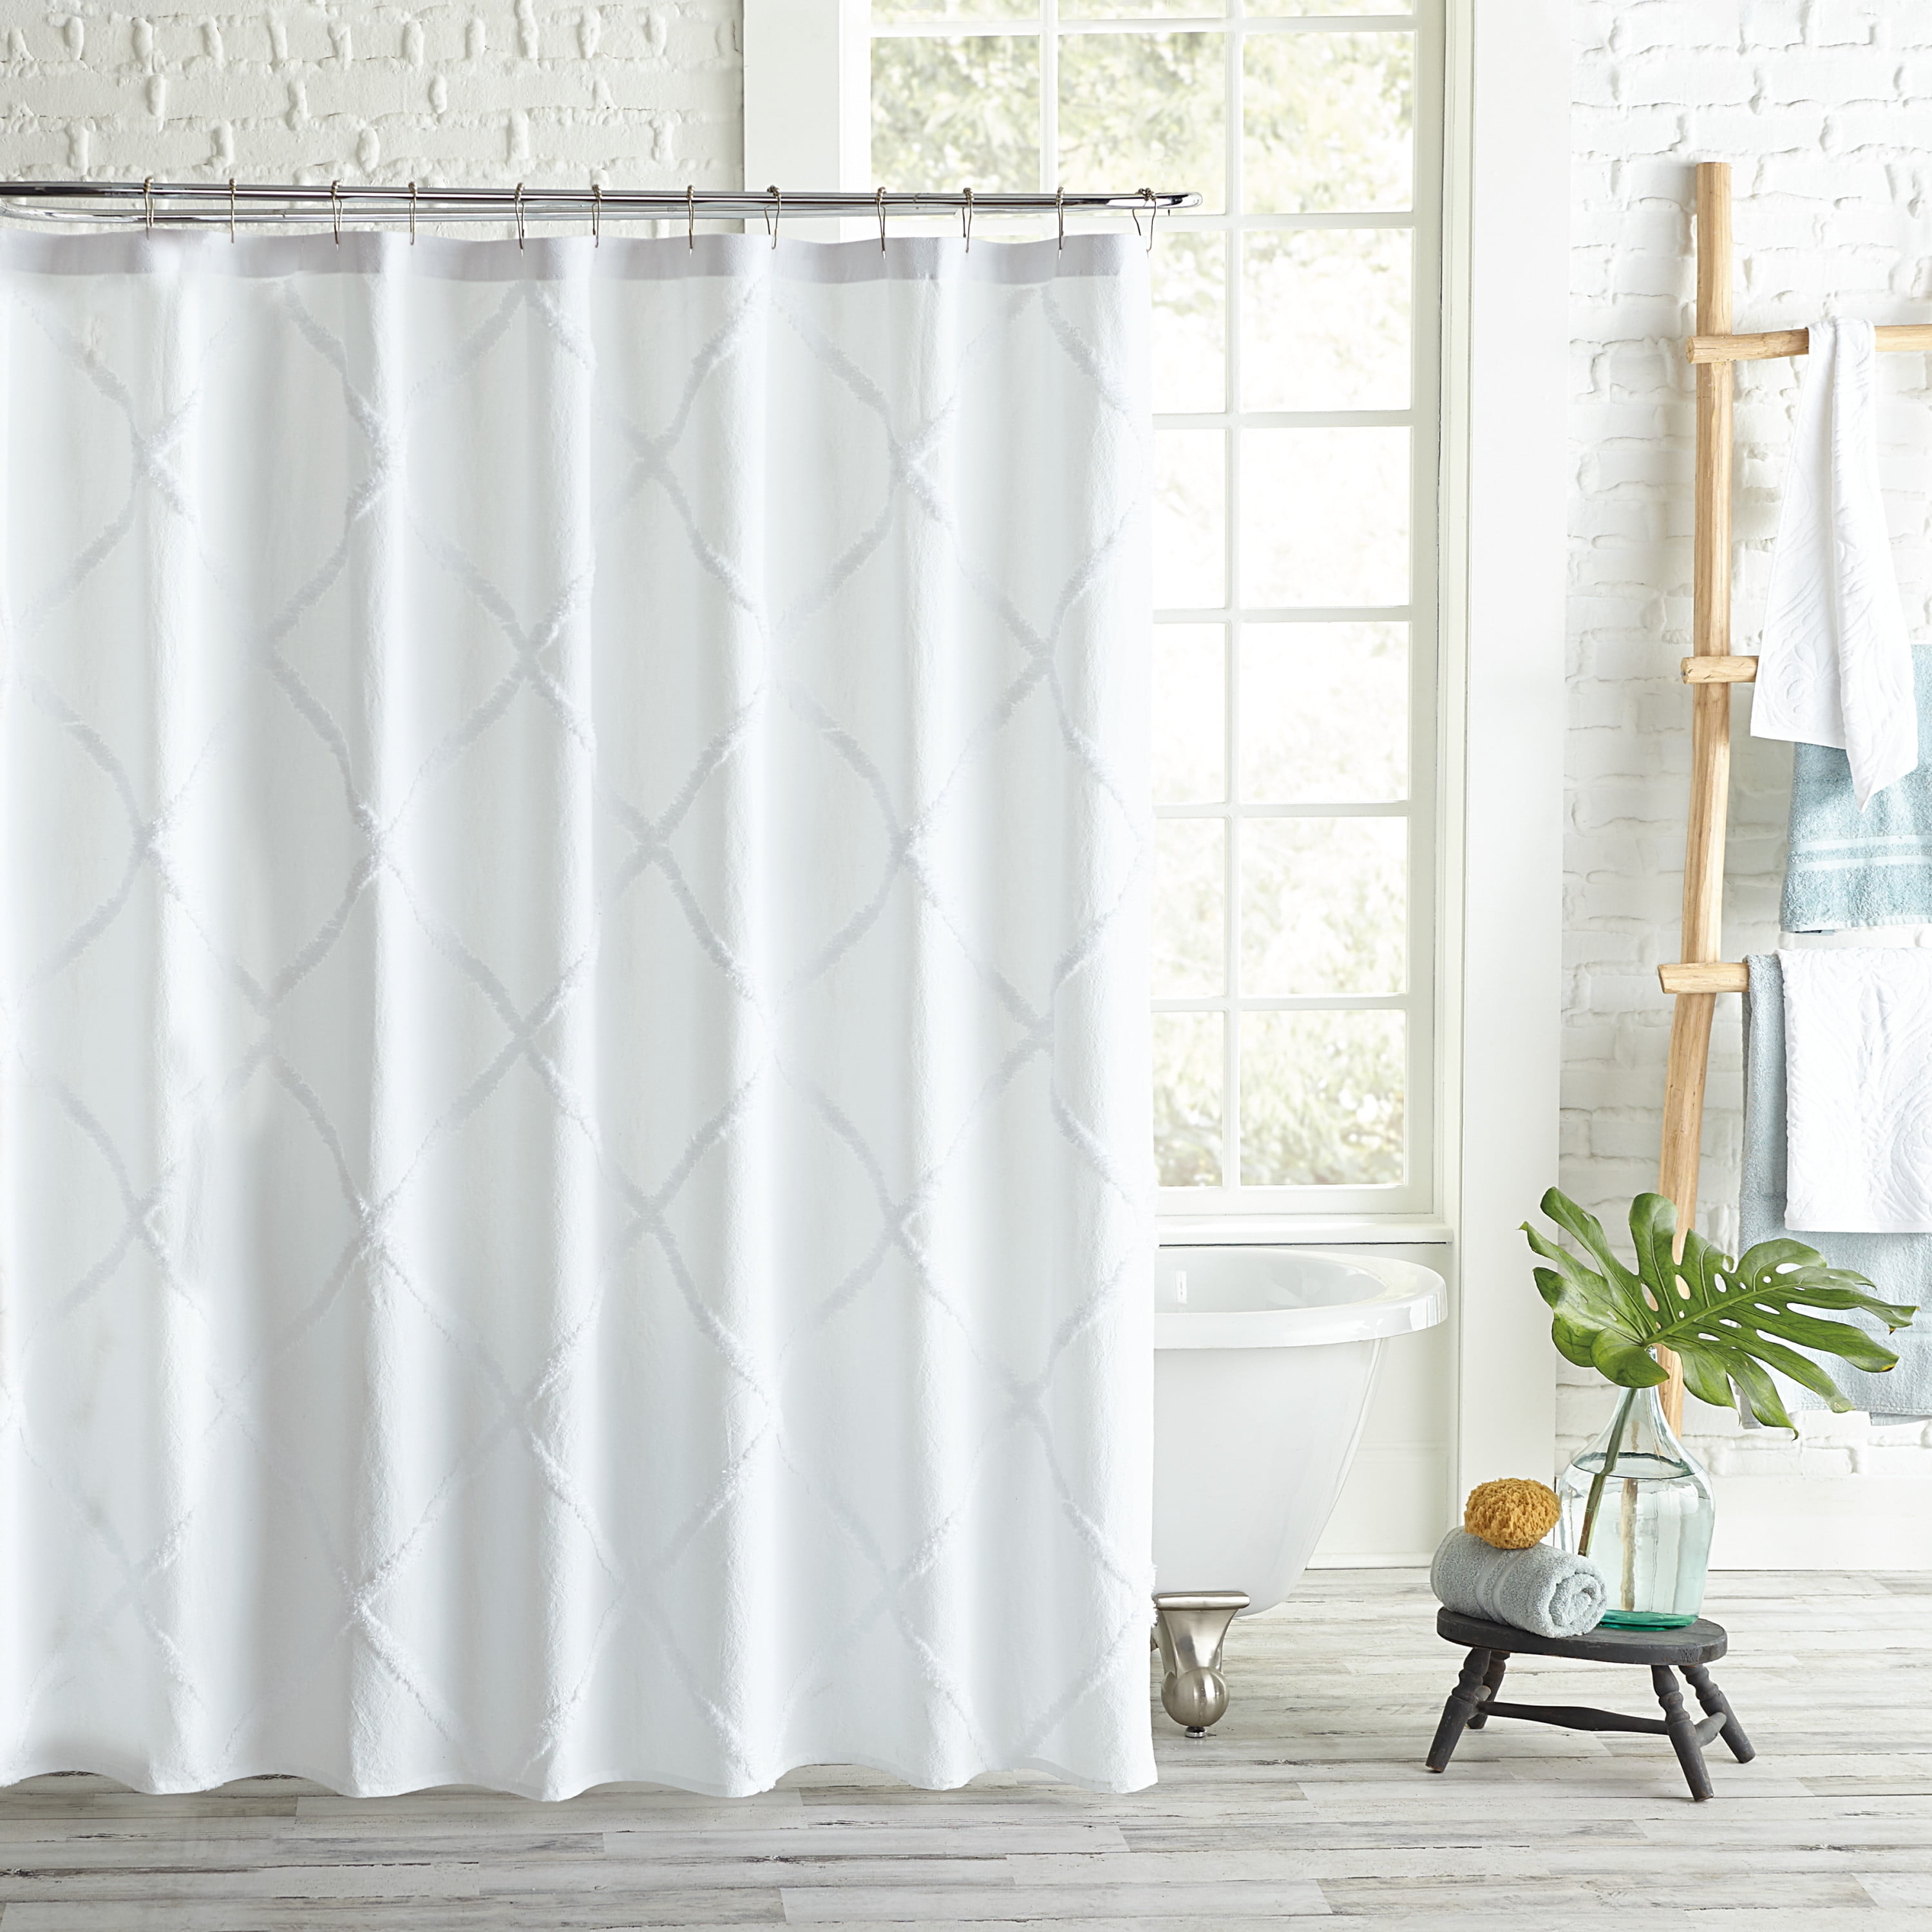 Waterproof Clear Shower Curtain Hooks Set,Contemporary Bathroom Curtains 72 x 72 Shower Curtains for Bathroom,Black White Lattice Plastic Shower Curtains for Bathroom Decor 